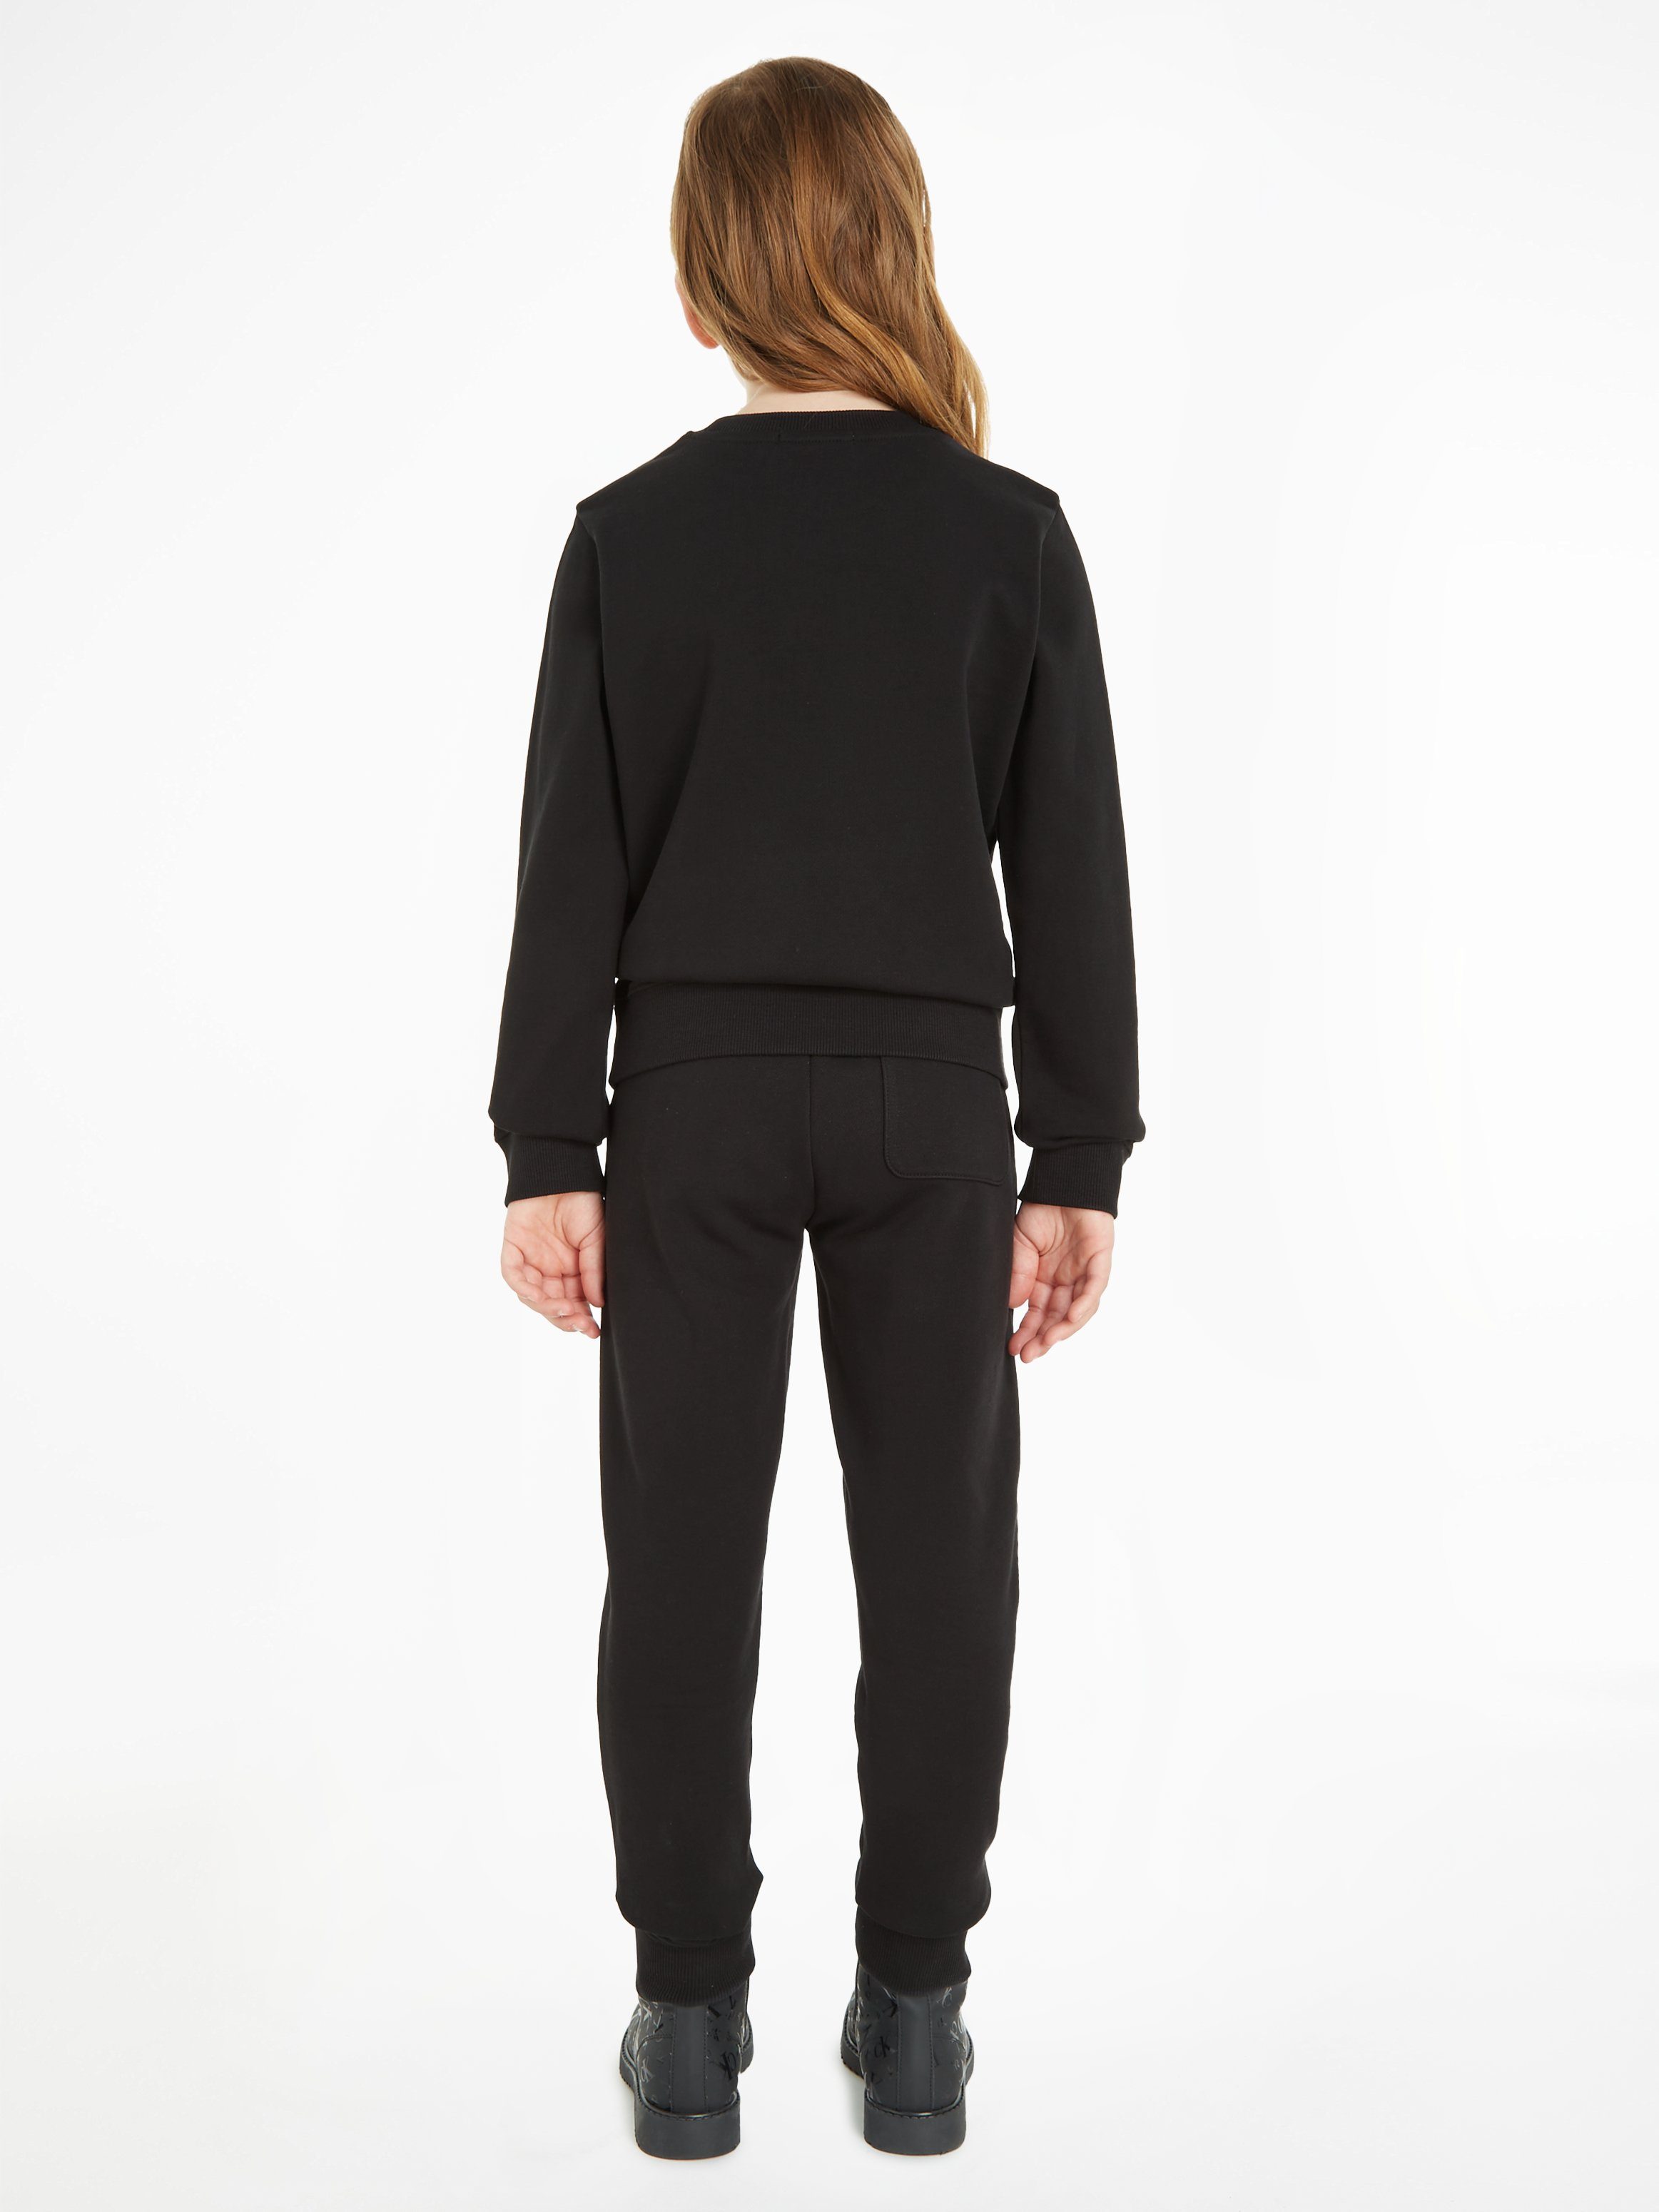 Calvin Klein Jeans INST. CN SET Sweatshirt REGULAR LOGO